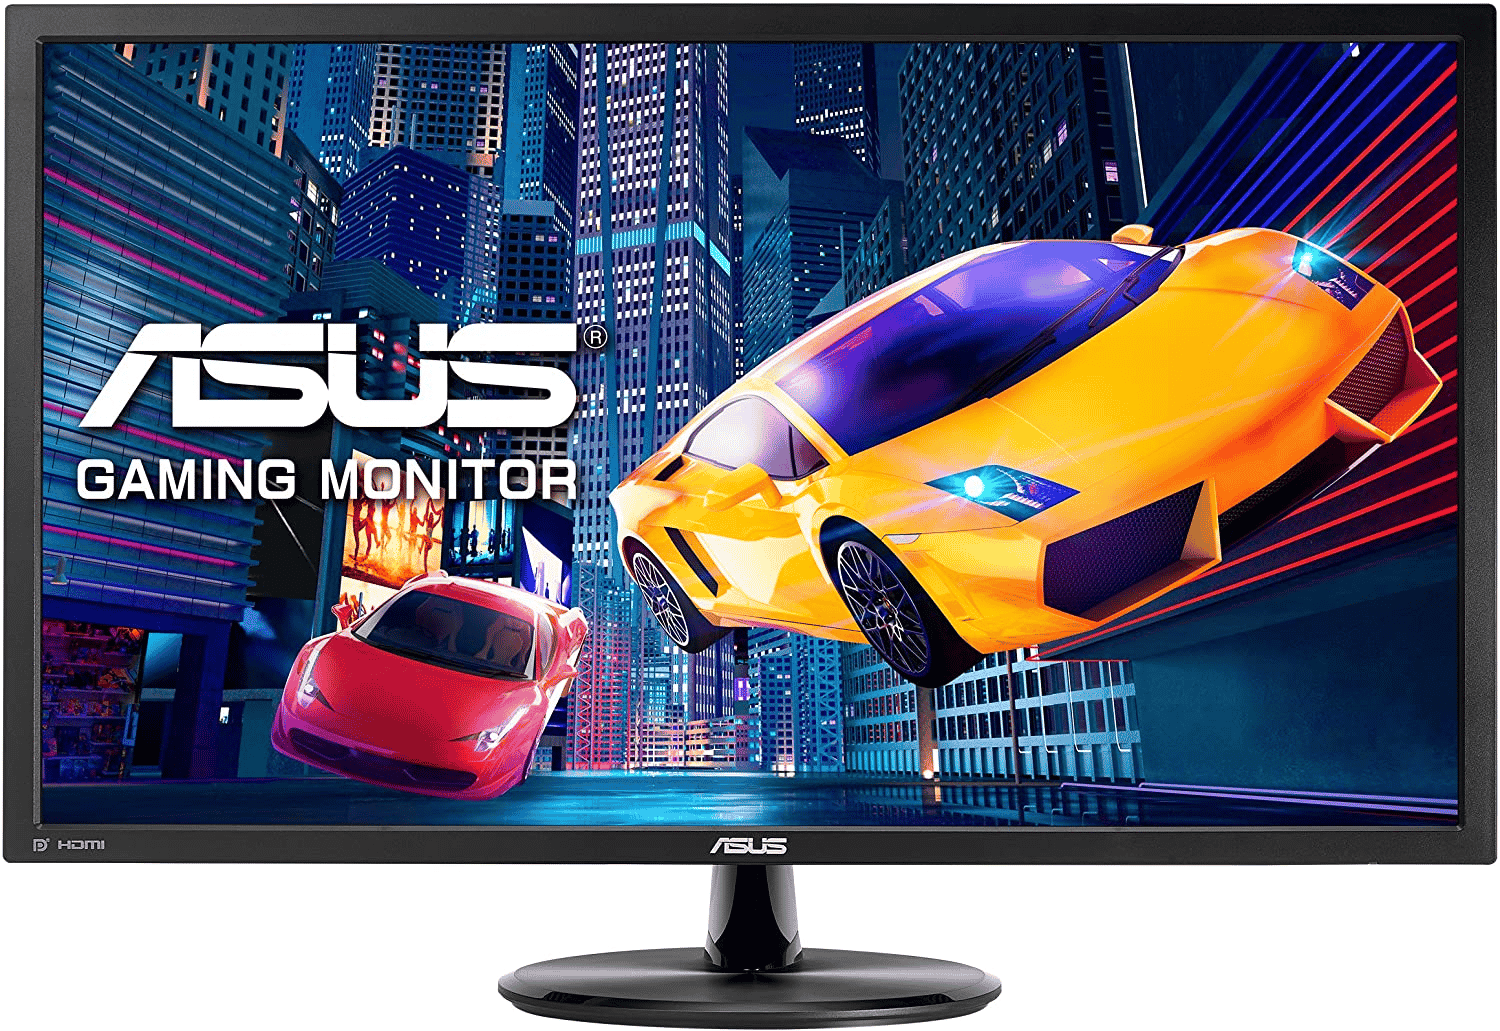 Asus vp28uqg | married games | melhores monitor gamers, monitor gamer, monitores gamers, monitor 4k, monitor curvo, monitor ultravide, monitor 144hz,